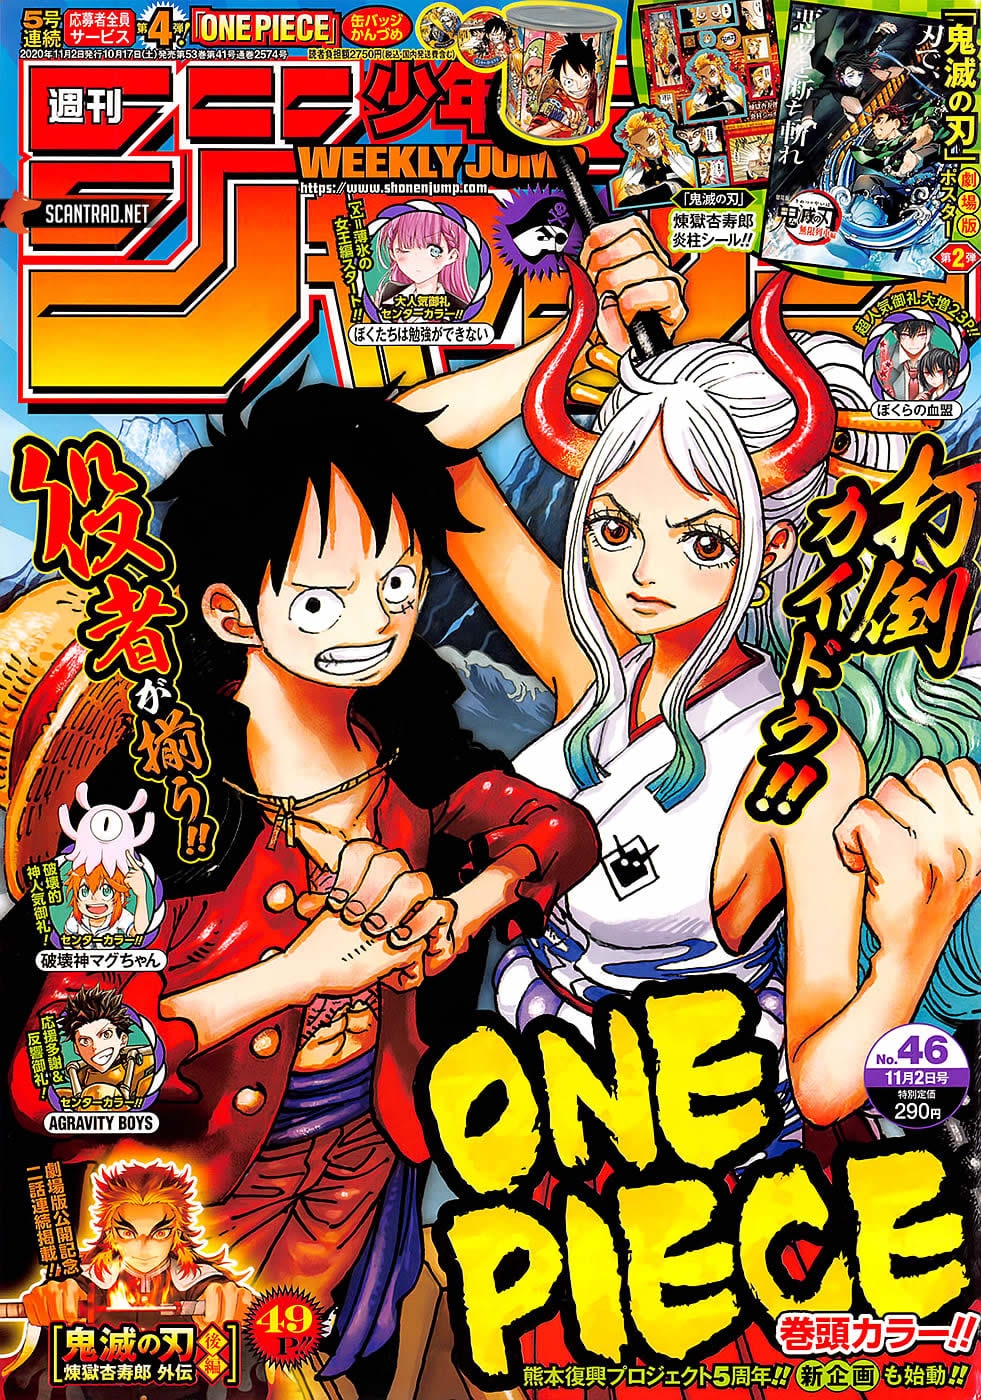 Manga One Piece 992 Online Inmanga